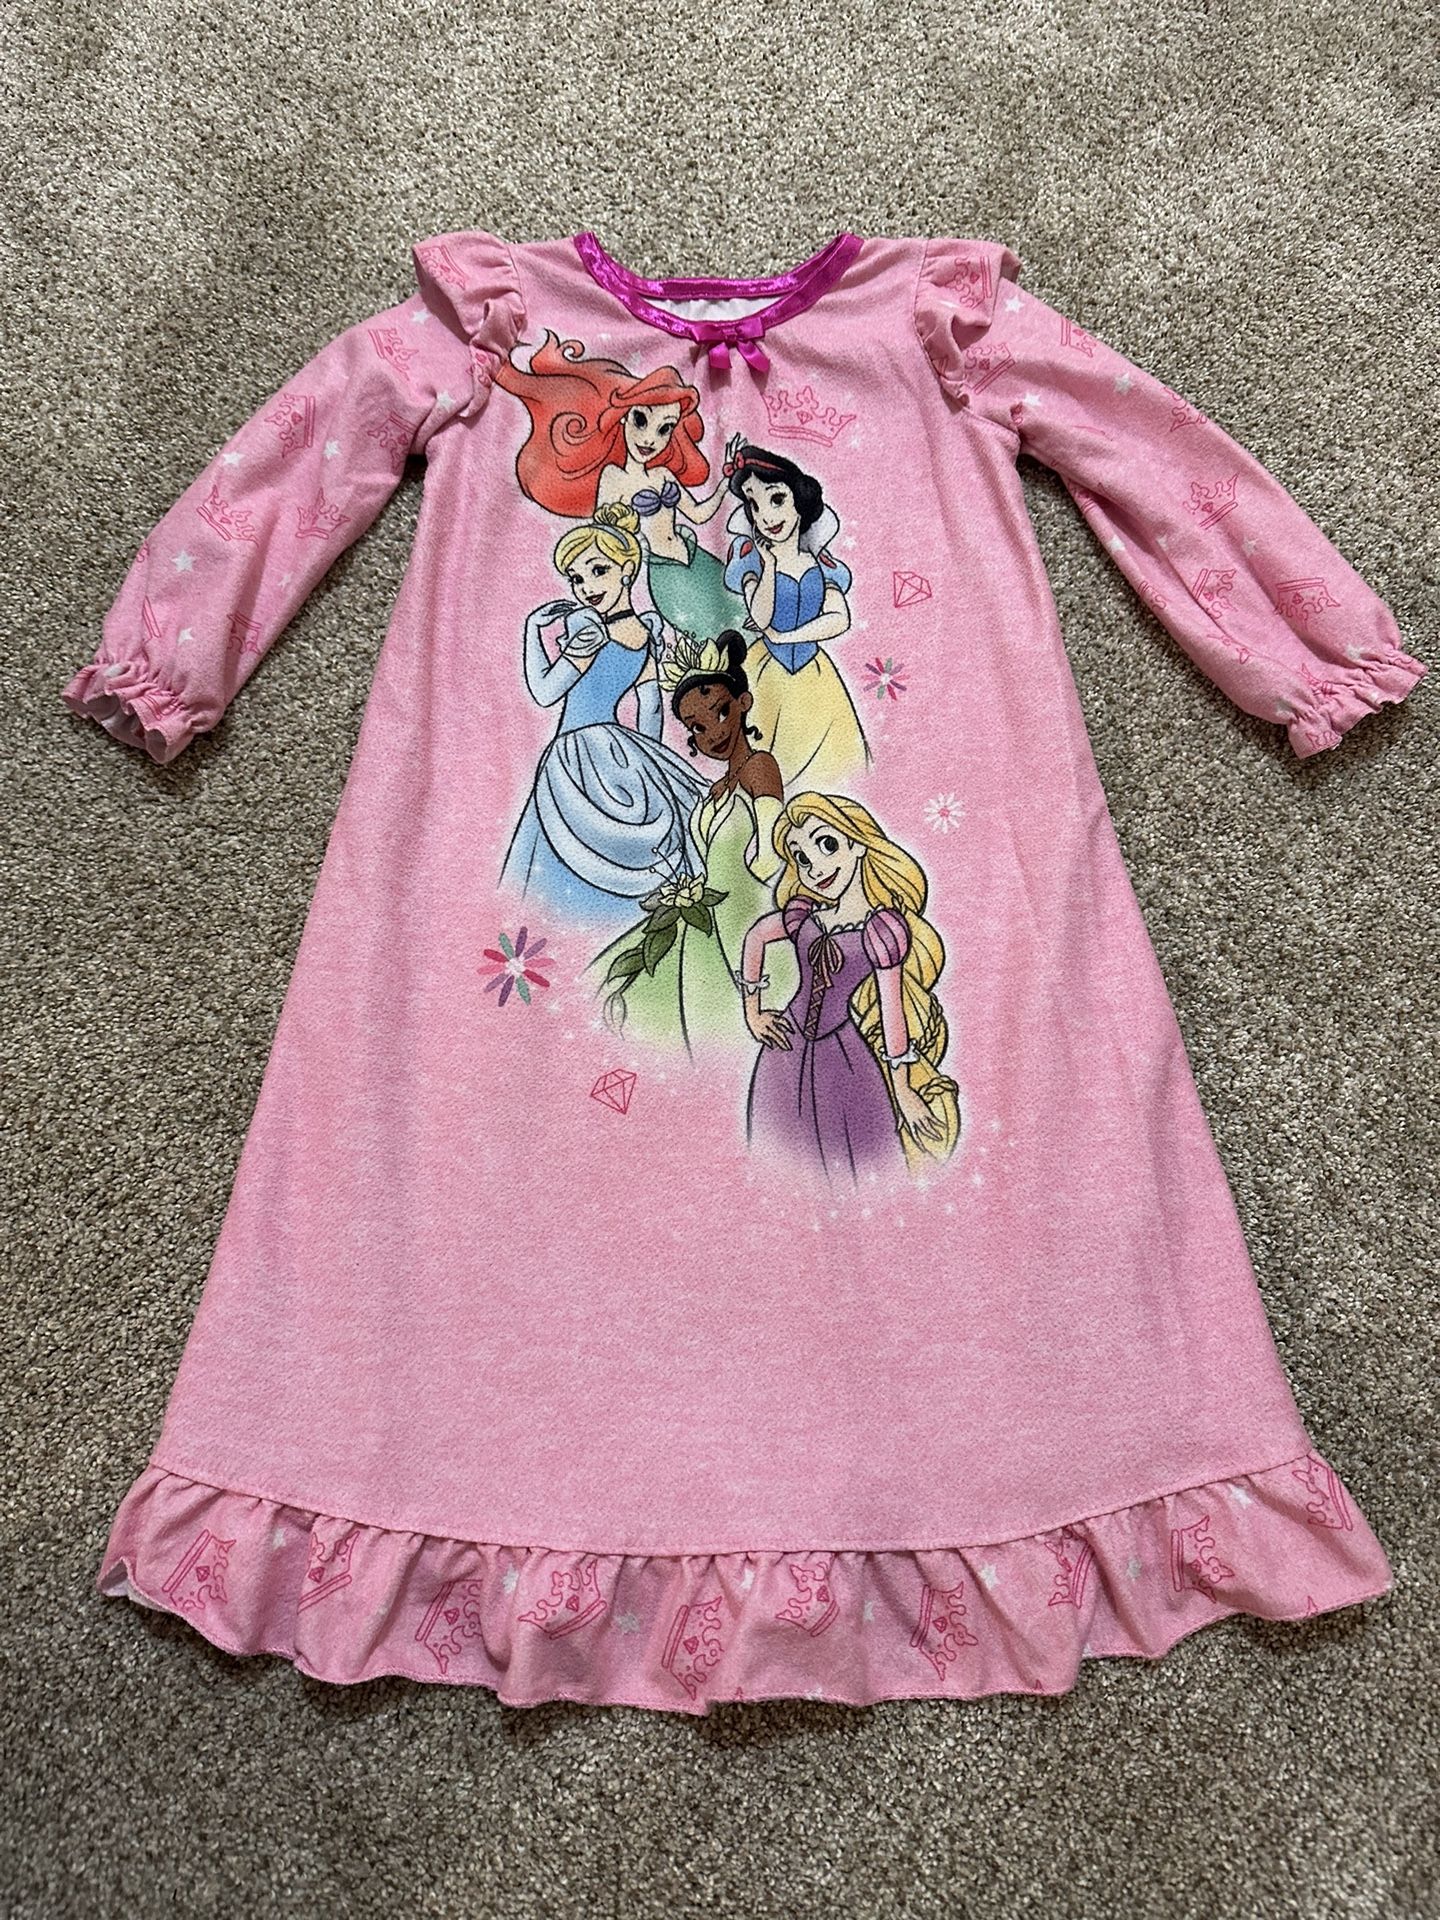 Toddler Girl Long Sleeve Pajama Nightgown Fleece 2T